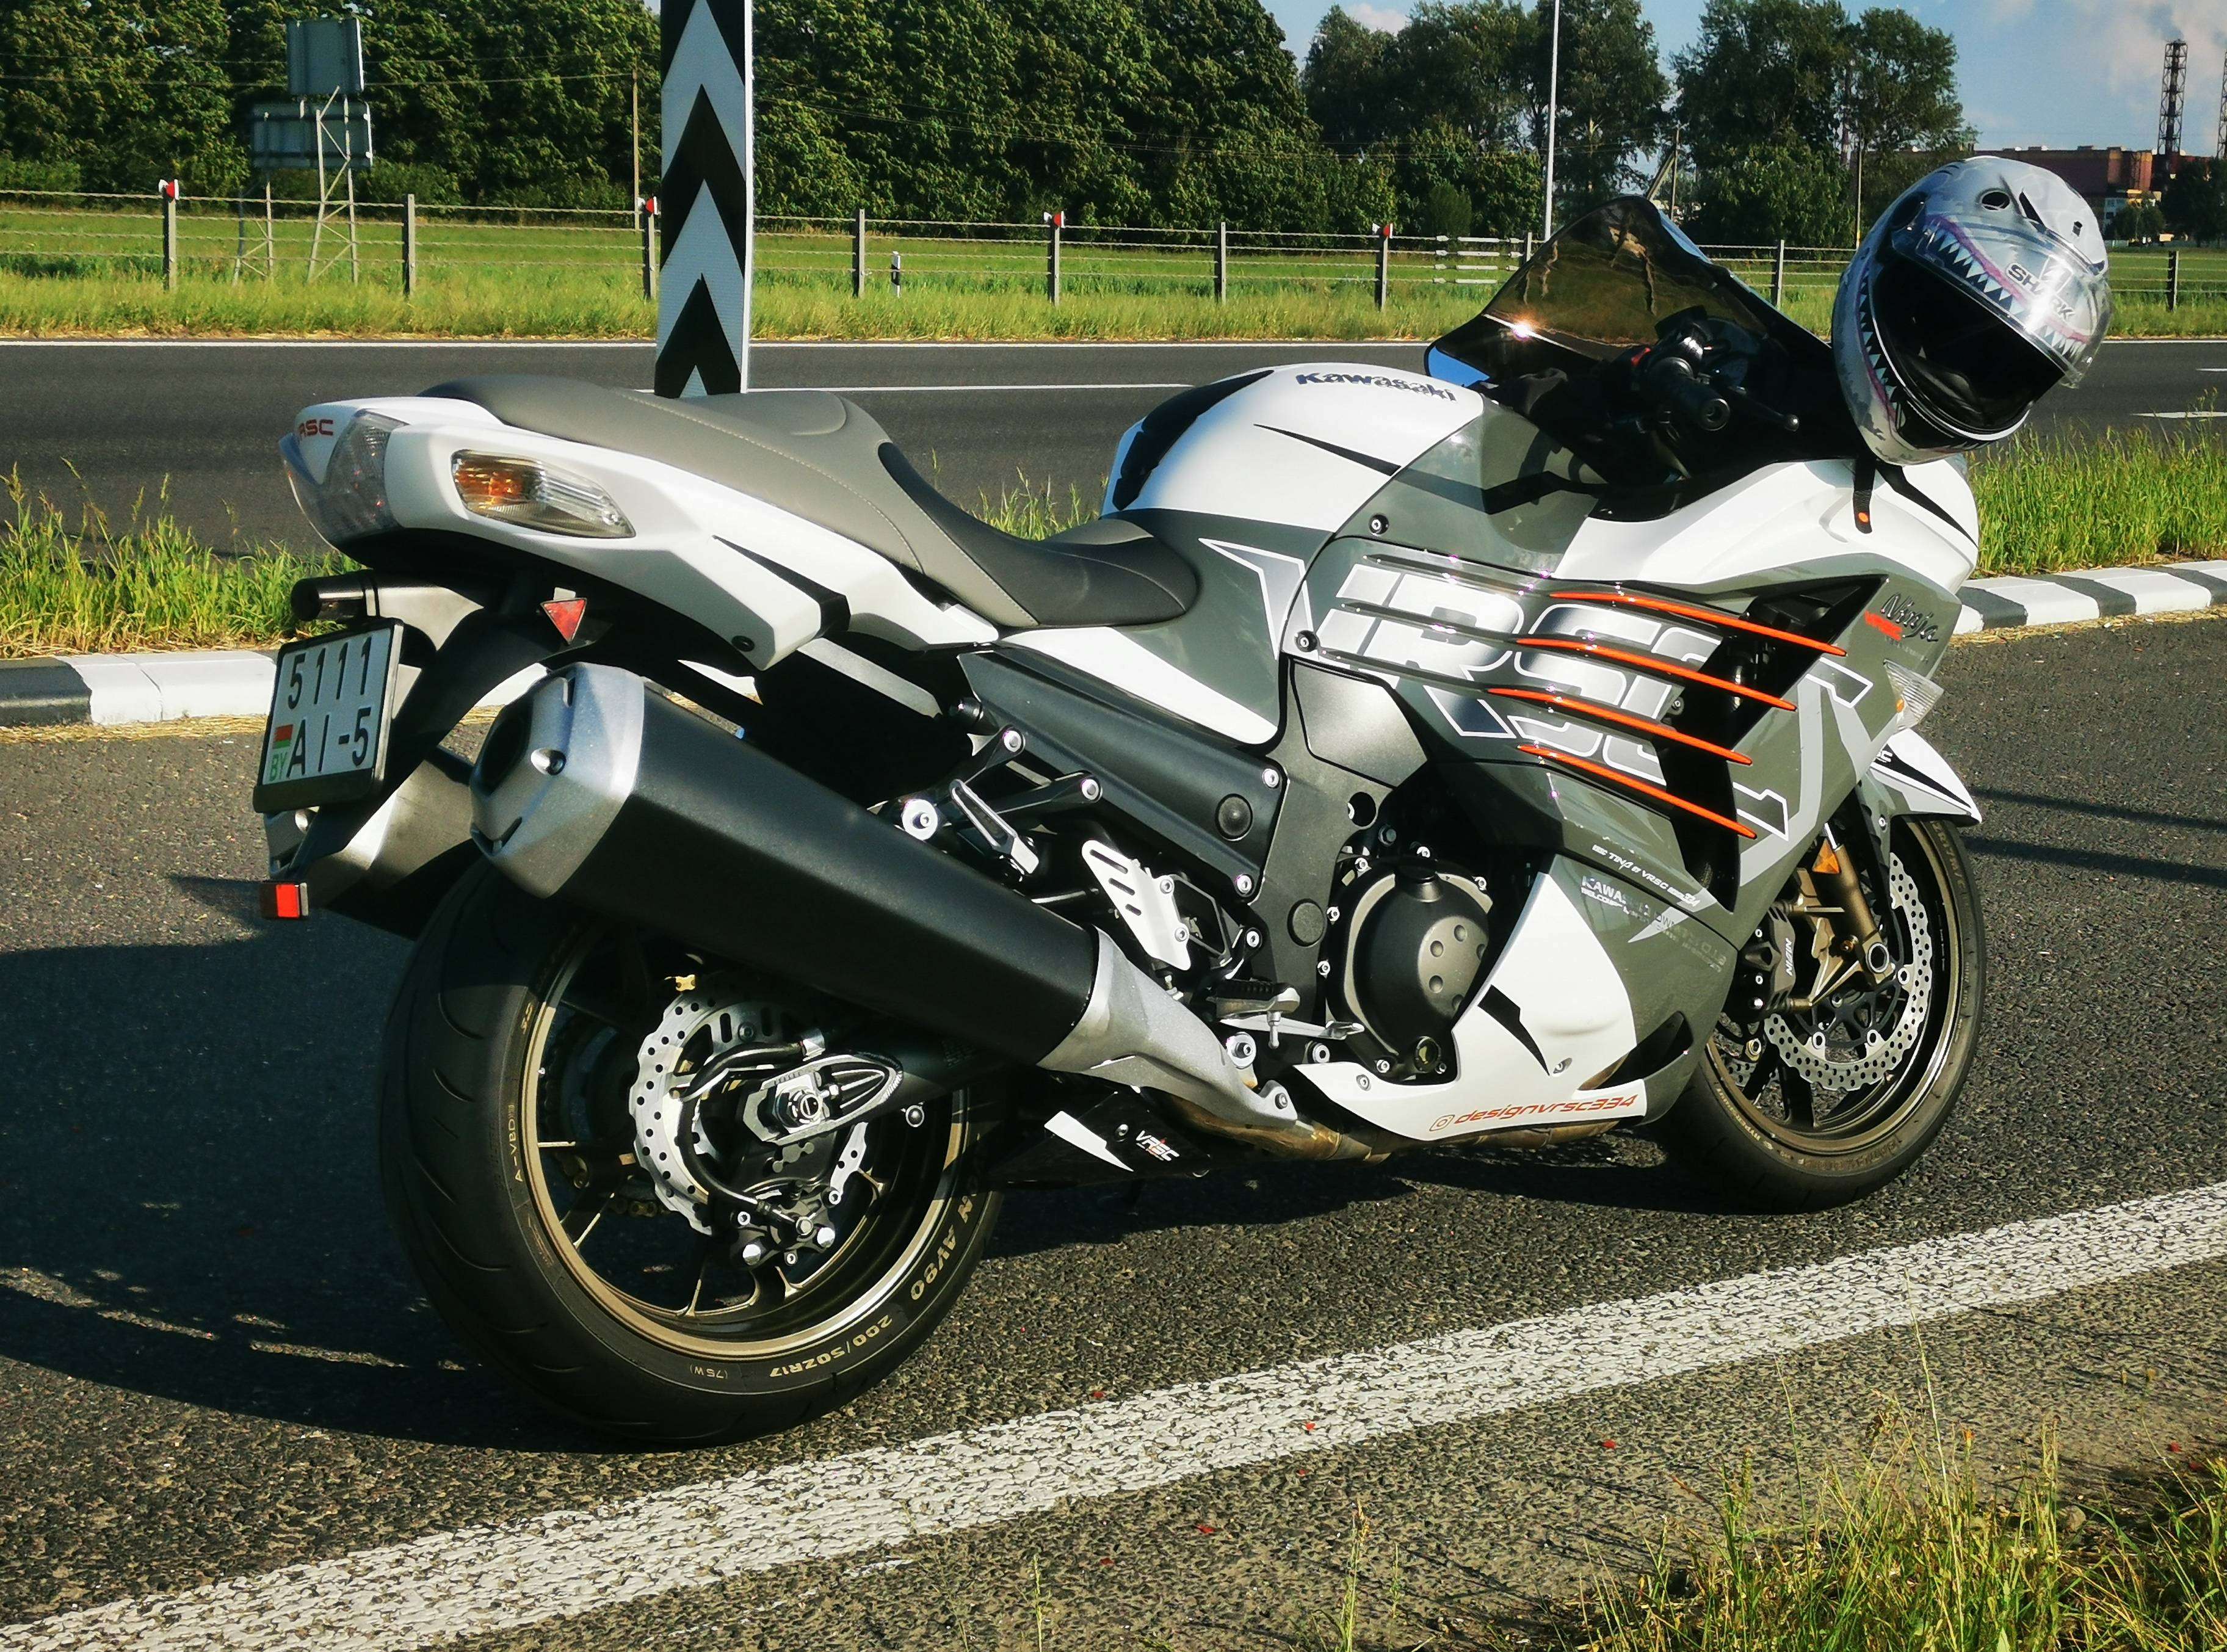 Купить мотоцикл Kawasaki ZX в Беларуси в кредит - цены, характеристики, фото. в Беларуси в кредит